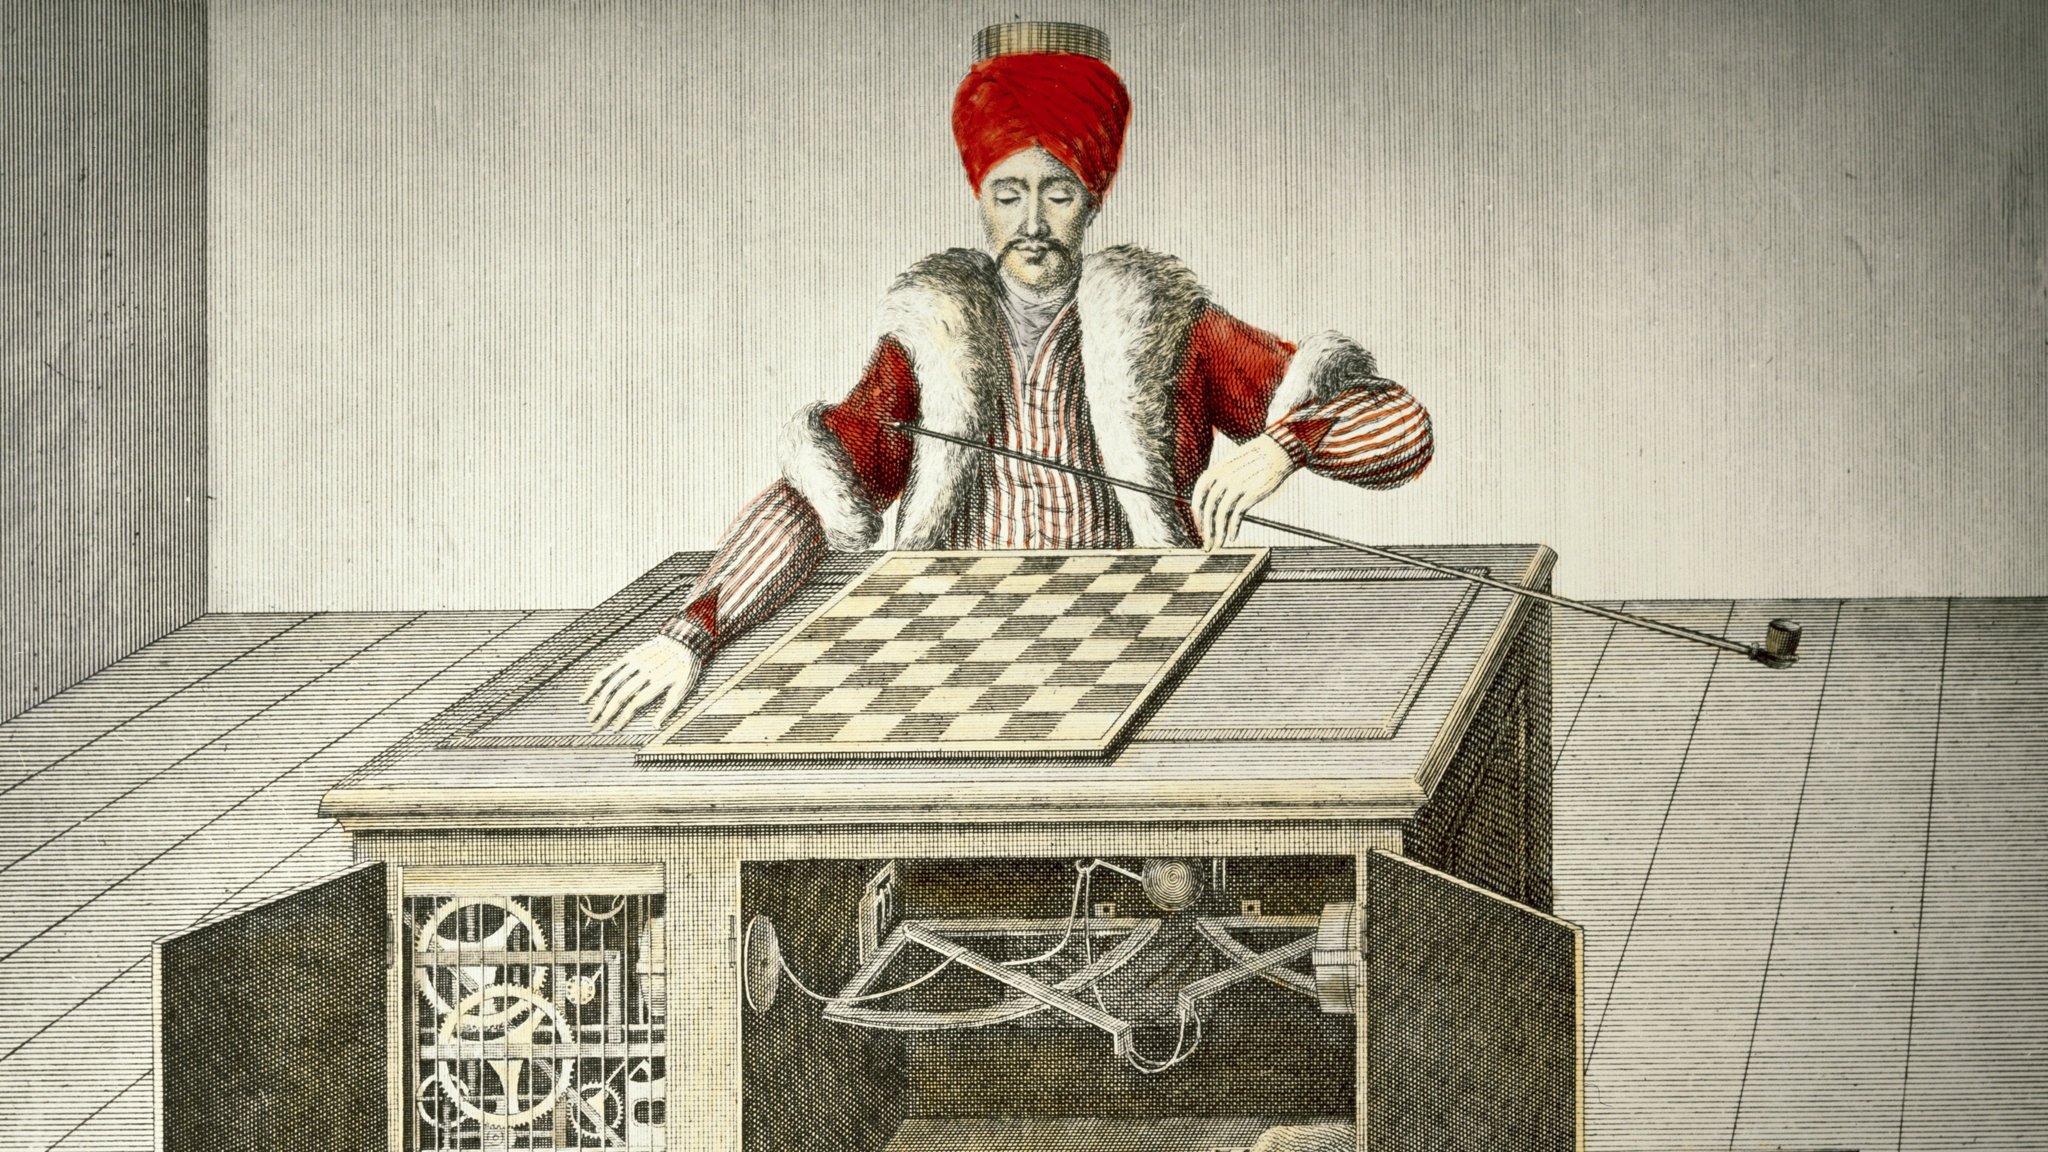 game and gambling, gaming machines, chess playing Turk, design by Wolfgang von Kempelen (1734 - 1804), built by Christoph Mechel